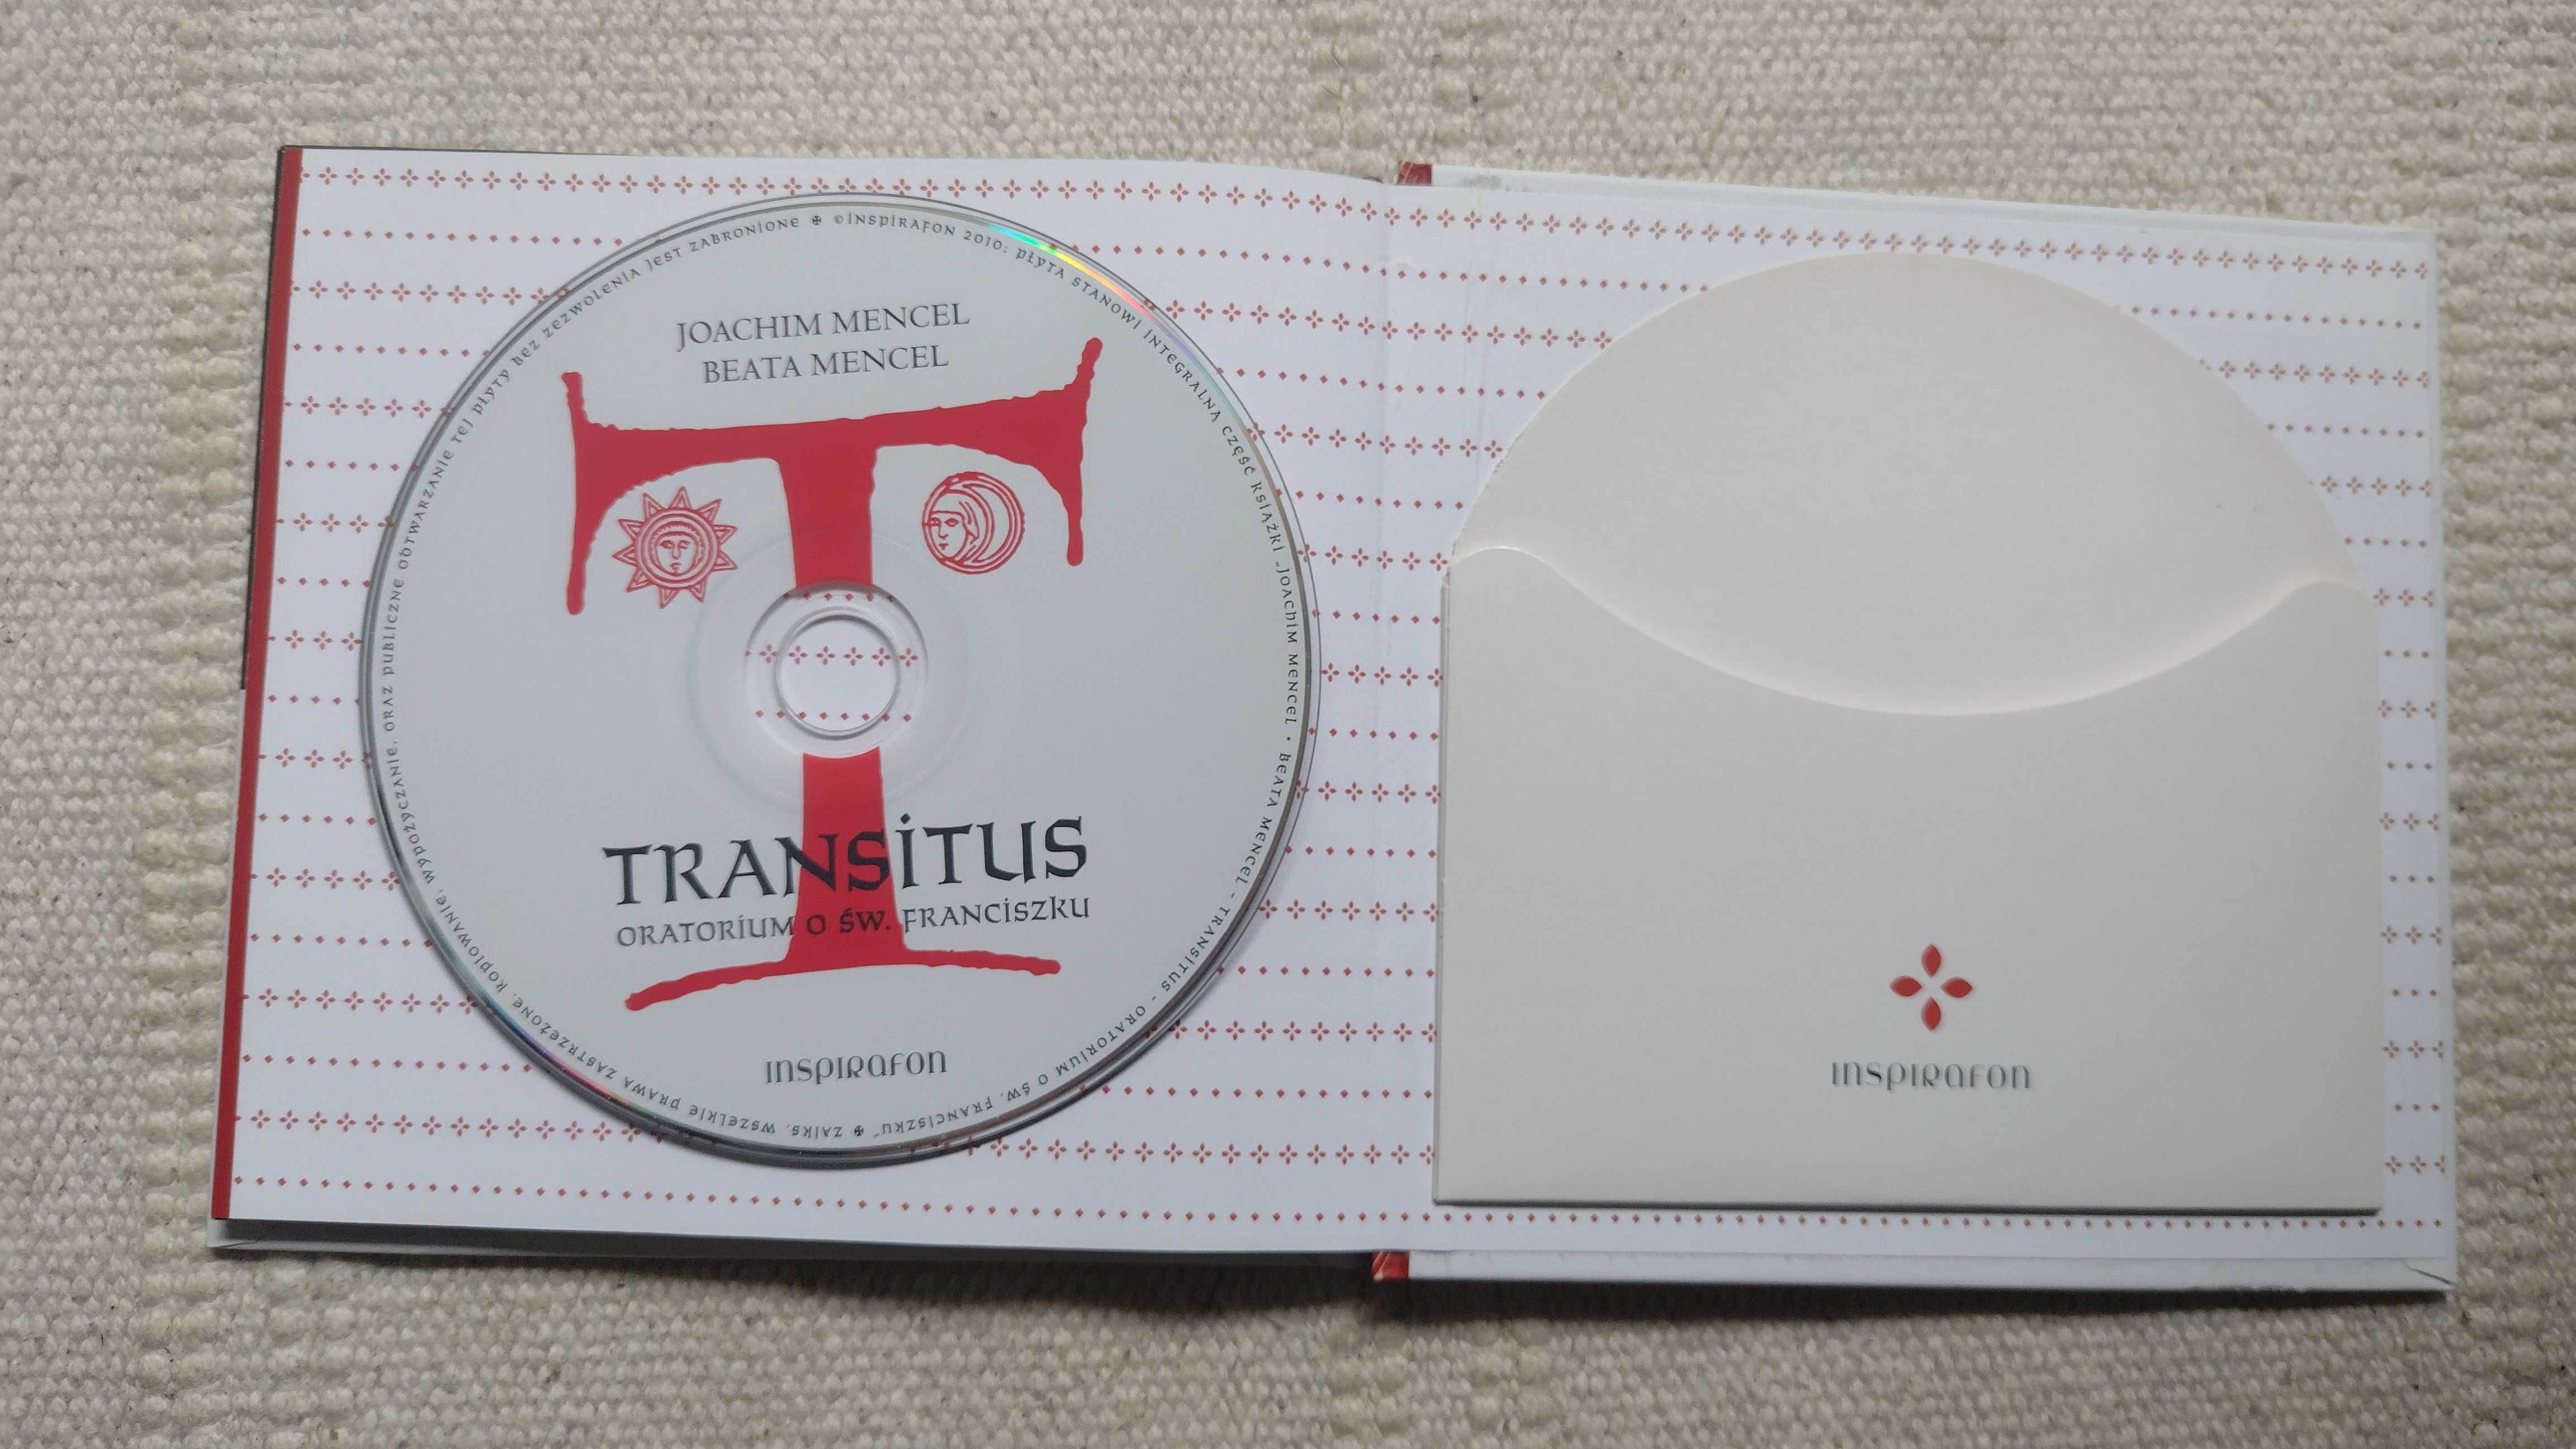 Oratorium o św Franciszku Transitus - Joachim i Beata Mencel -płyta CD